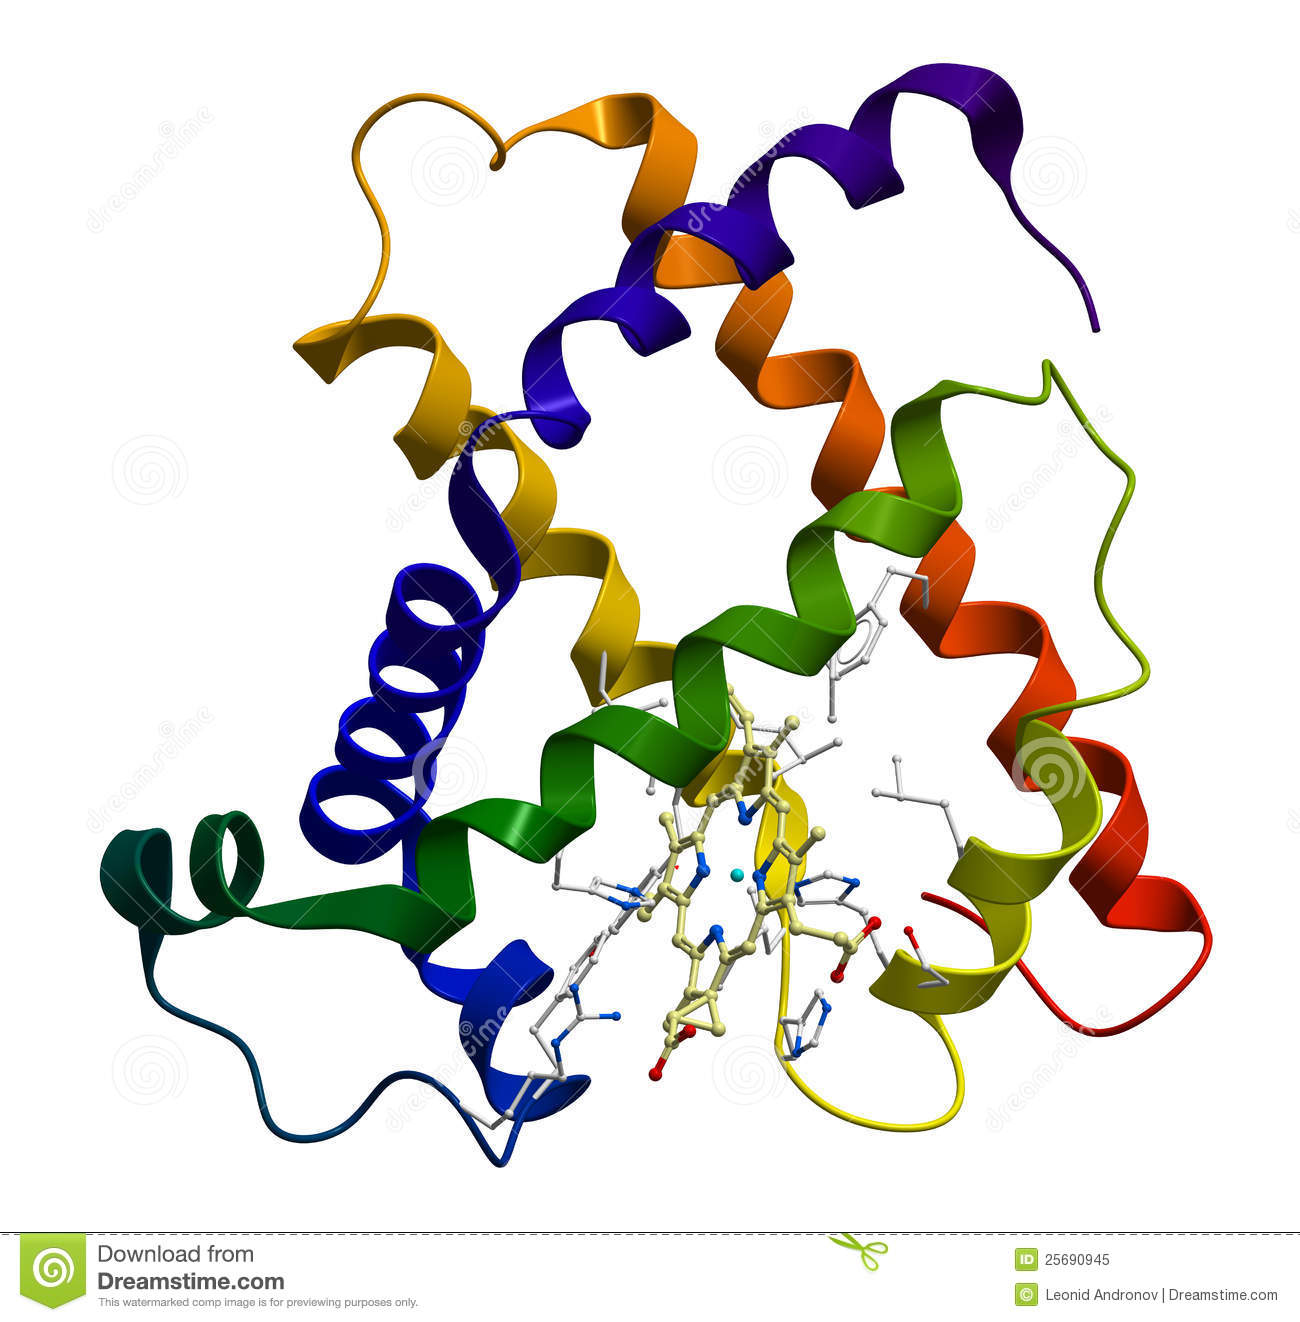 Protein Myoglobin Molecule Royalty Free Stock Photo   Image  25690945